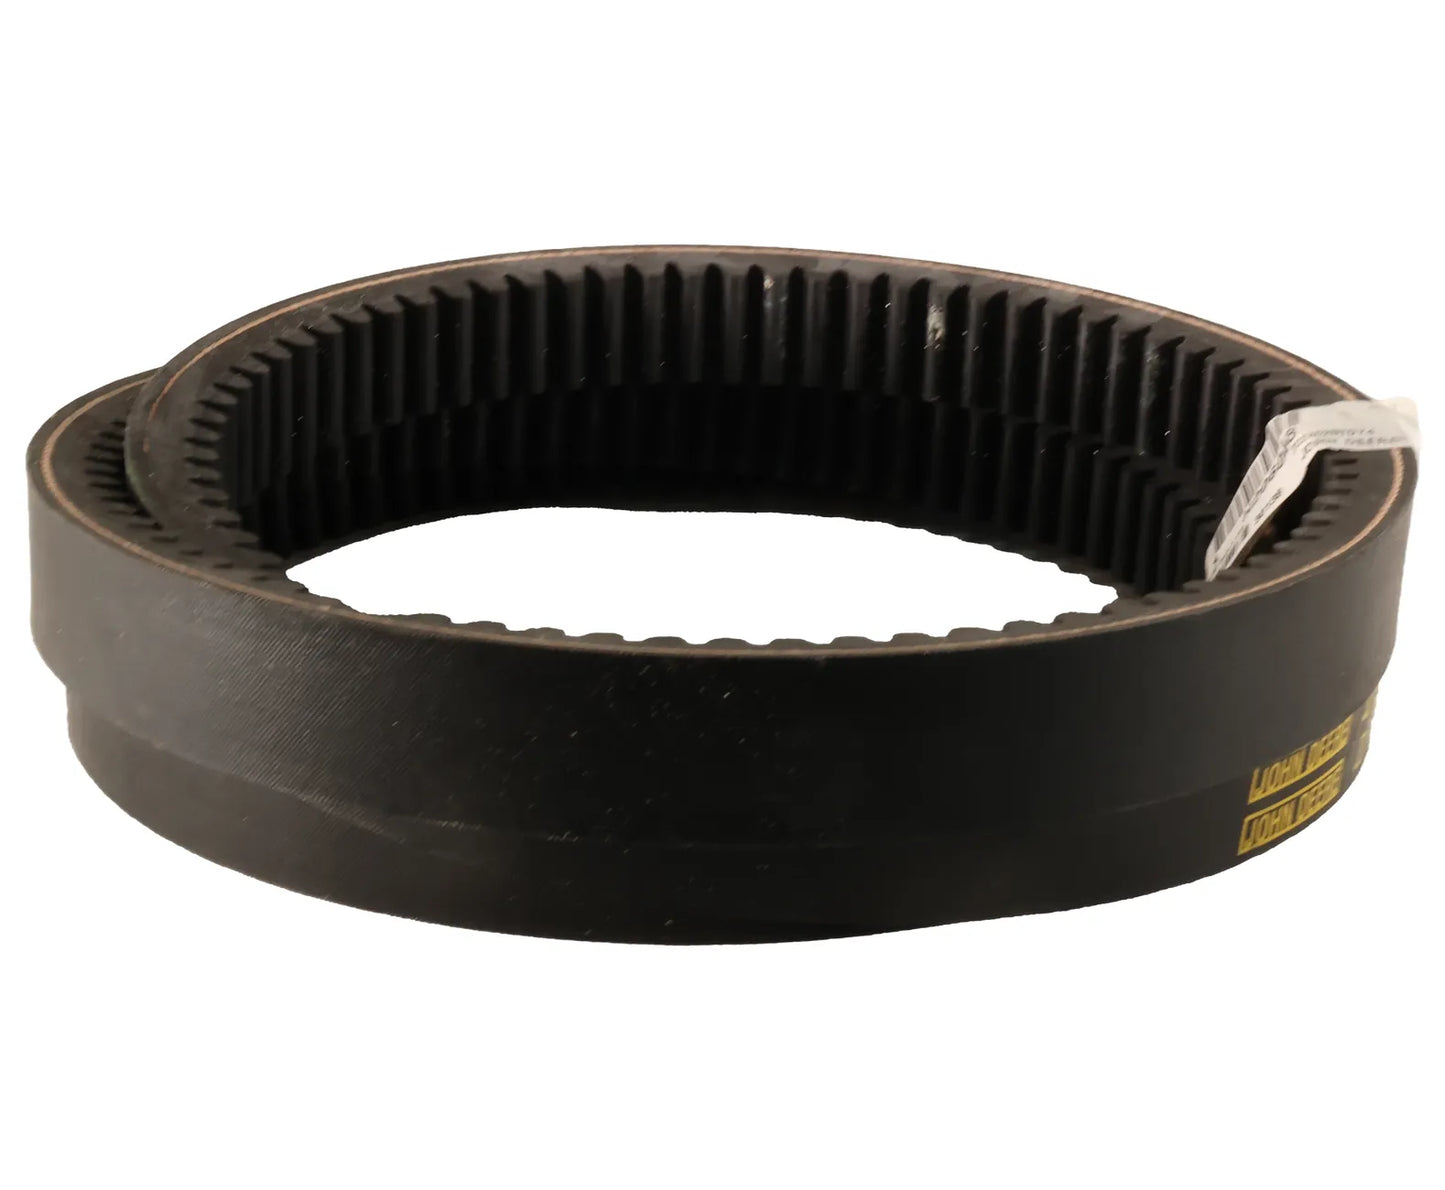 John Deere Original Equipment Hj Section Cleaning Fan Drive V-Belt, Effective Length 2305.0 Mm (90.7 Inch) - H206048